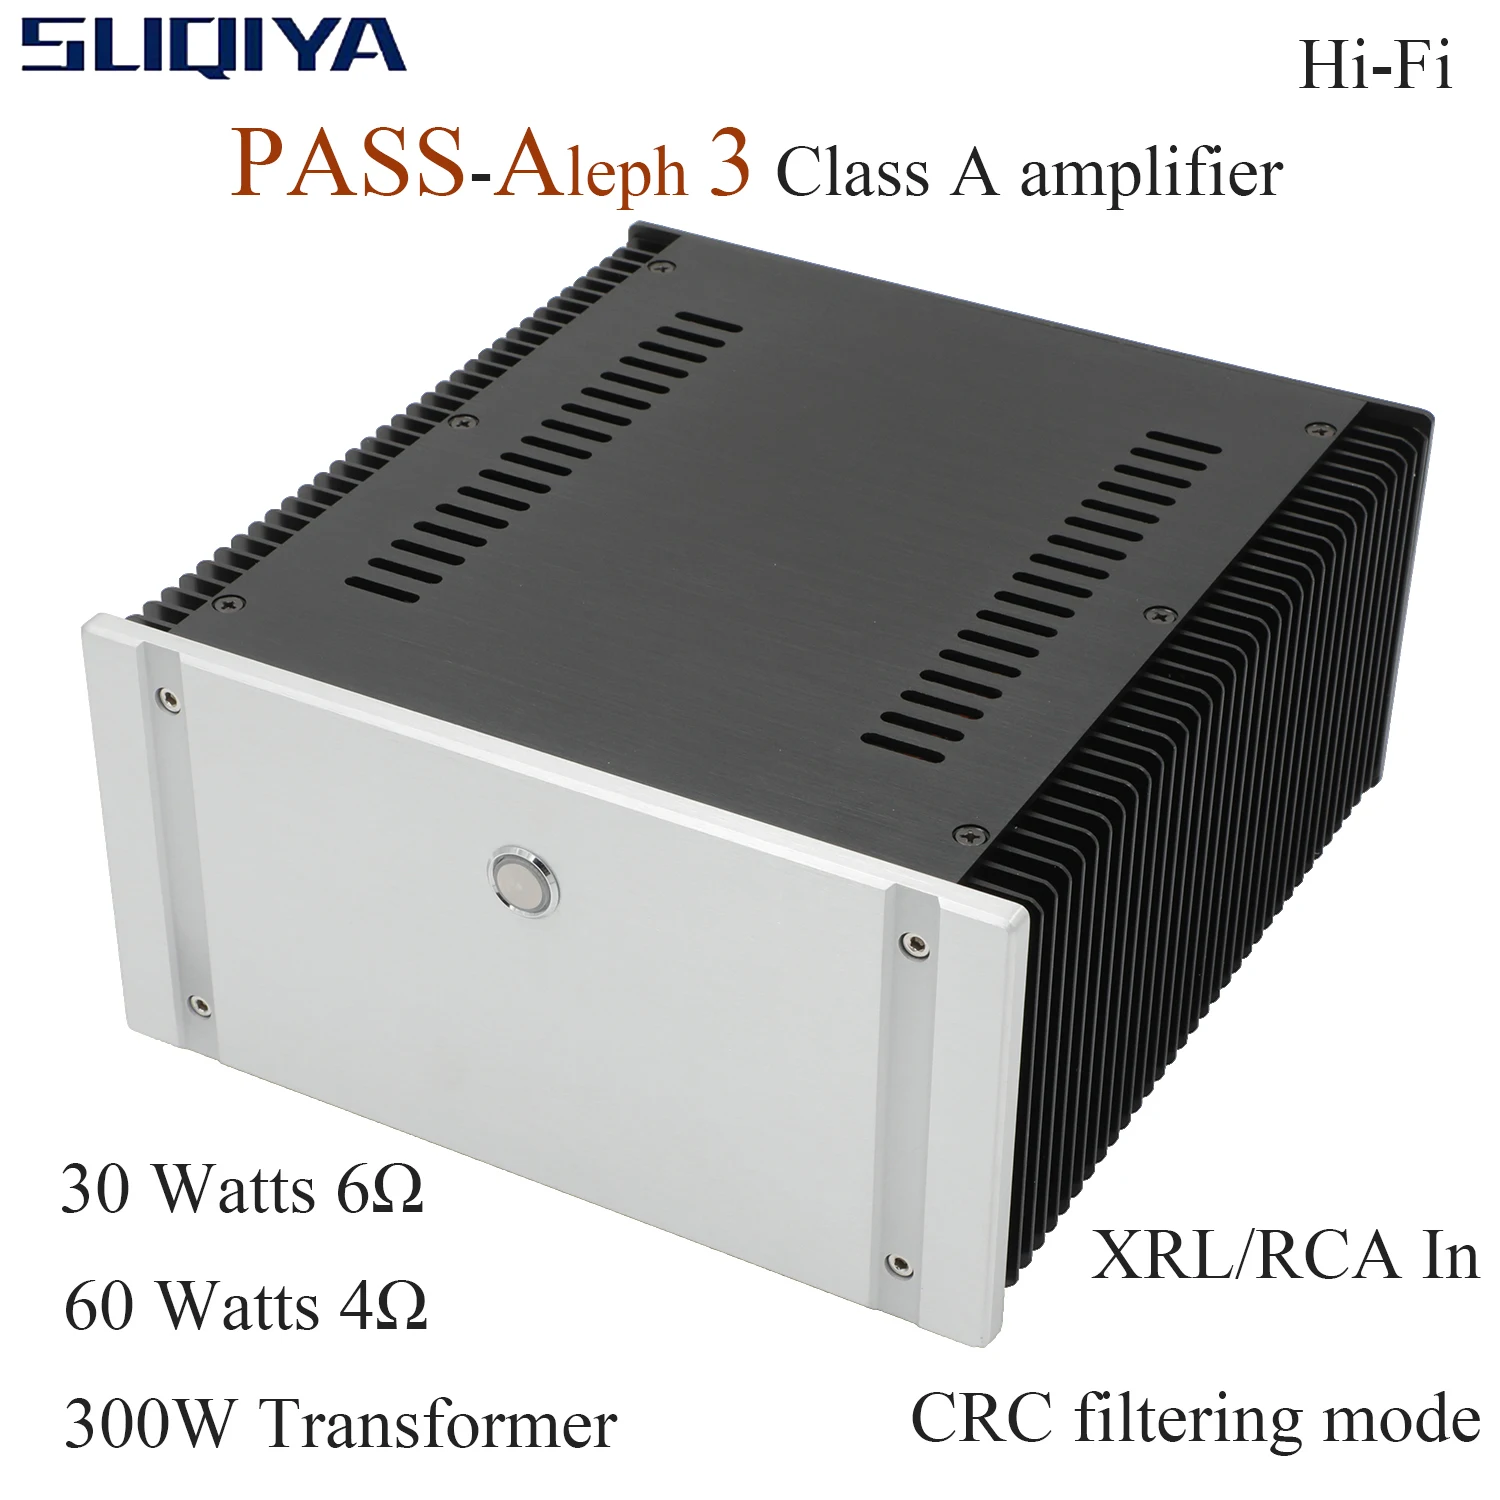 

SUQIYA-PASS ALEPH-3 Flagship Single-ended Pure Class A 30W Power Amplifier Fever-grade Pure Class A Hi-Fi Mono Power Amplifier